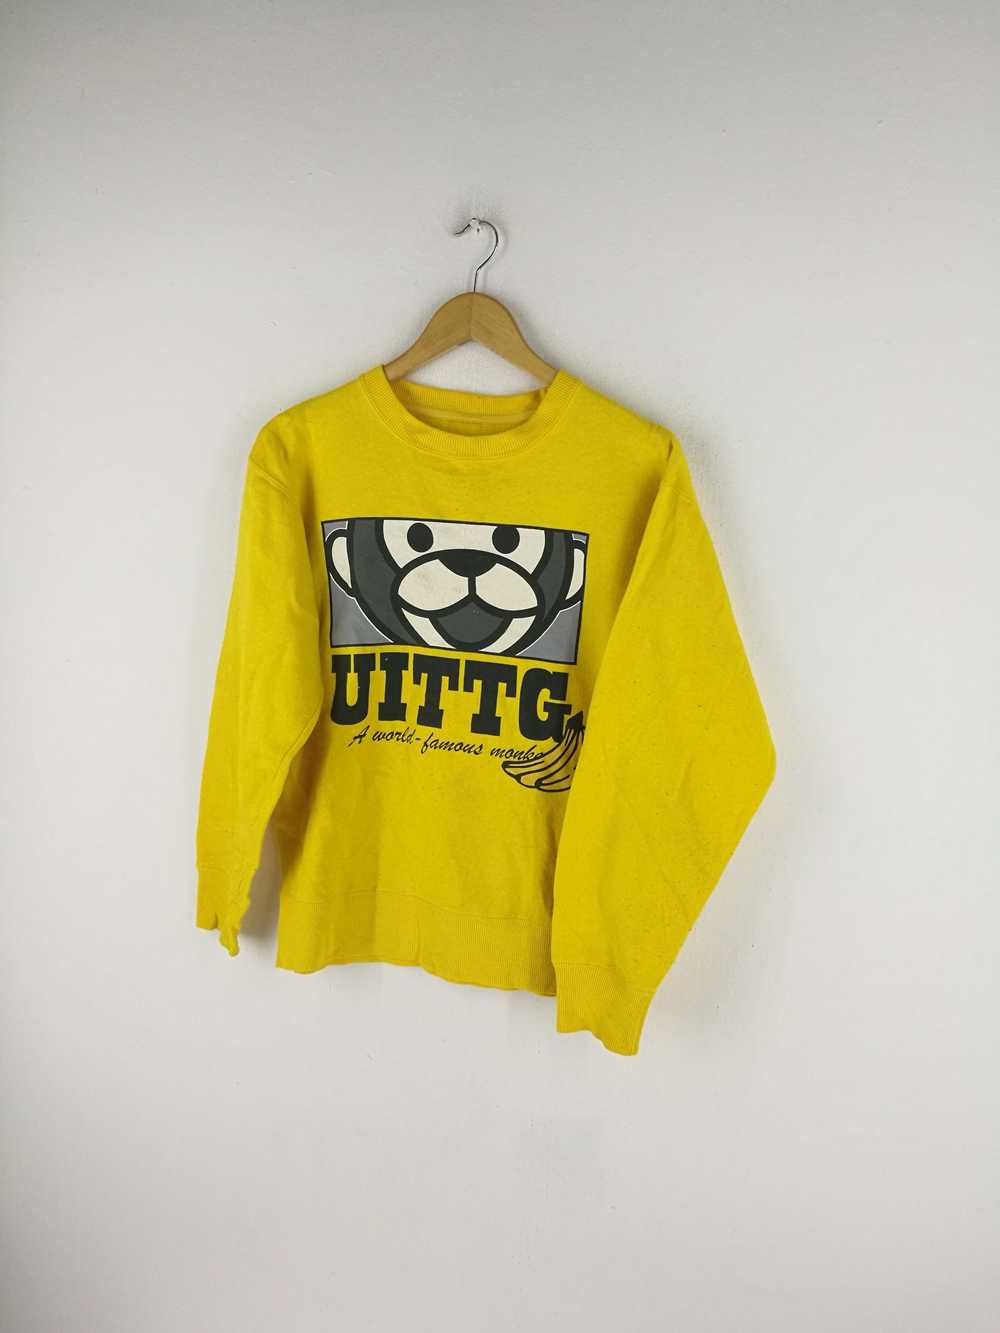 Japanese Brand Uttg baby Bape sweatshirt - image 2